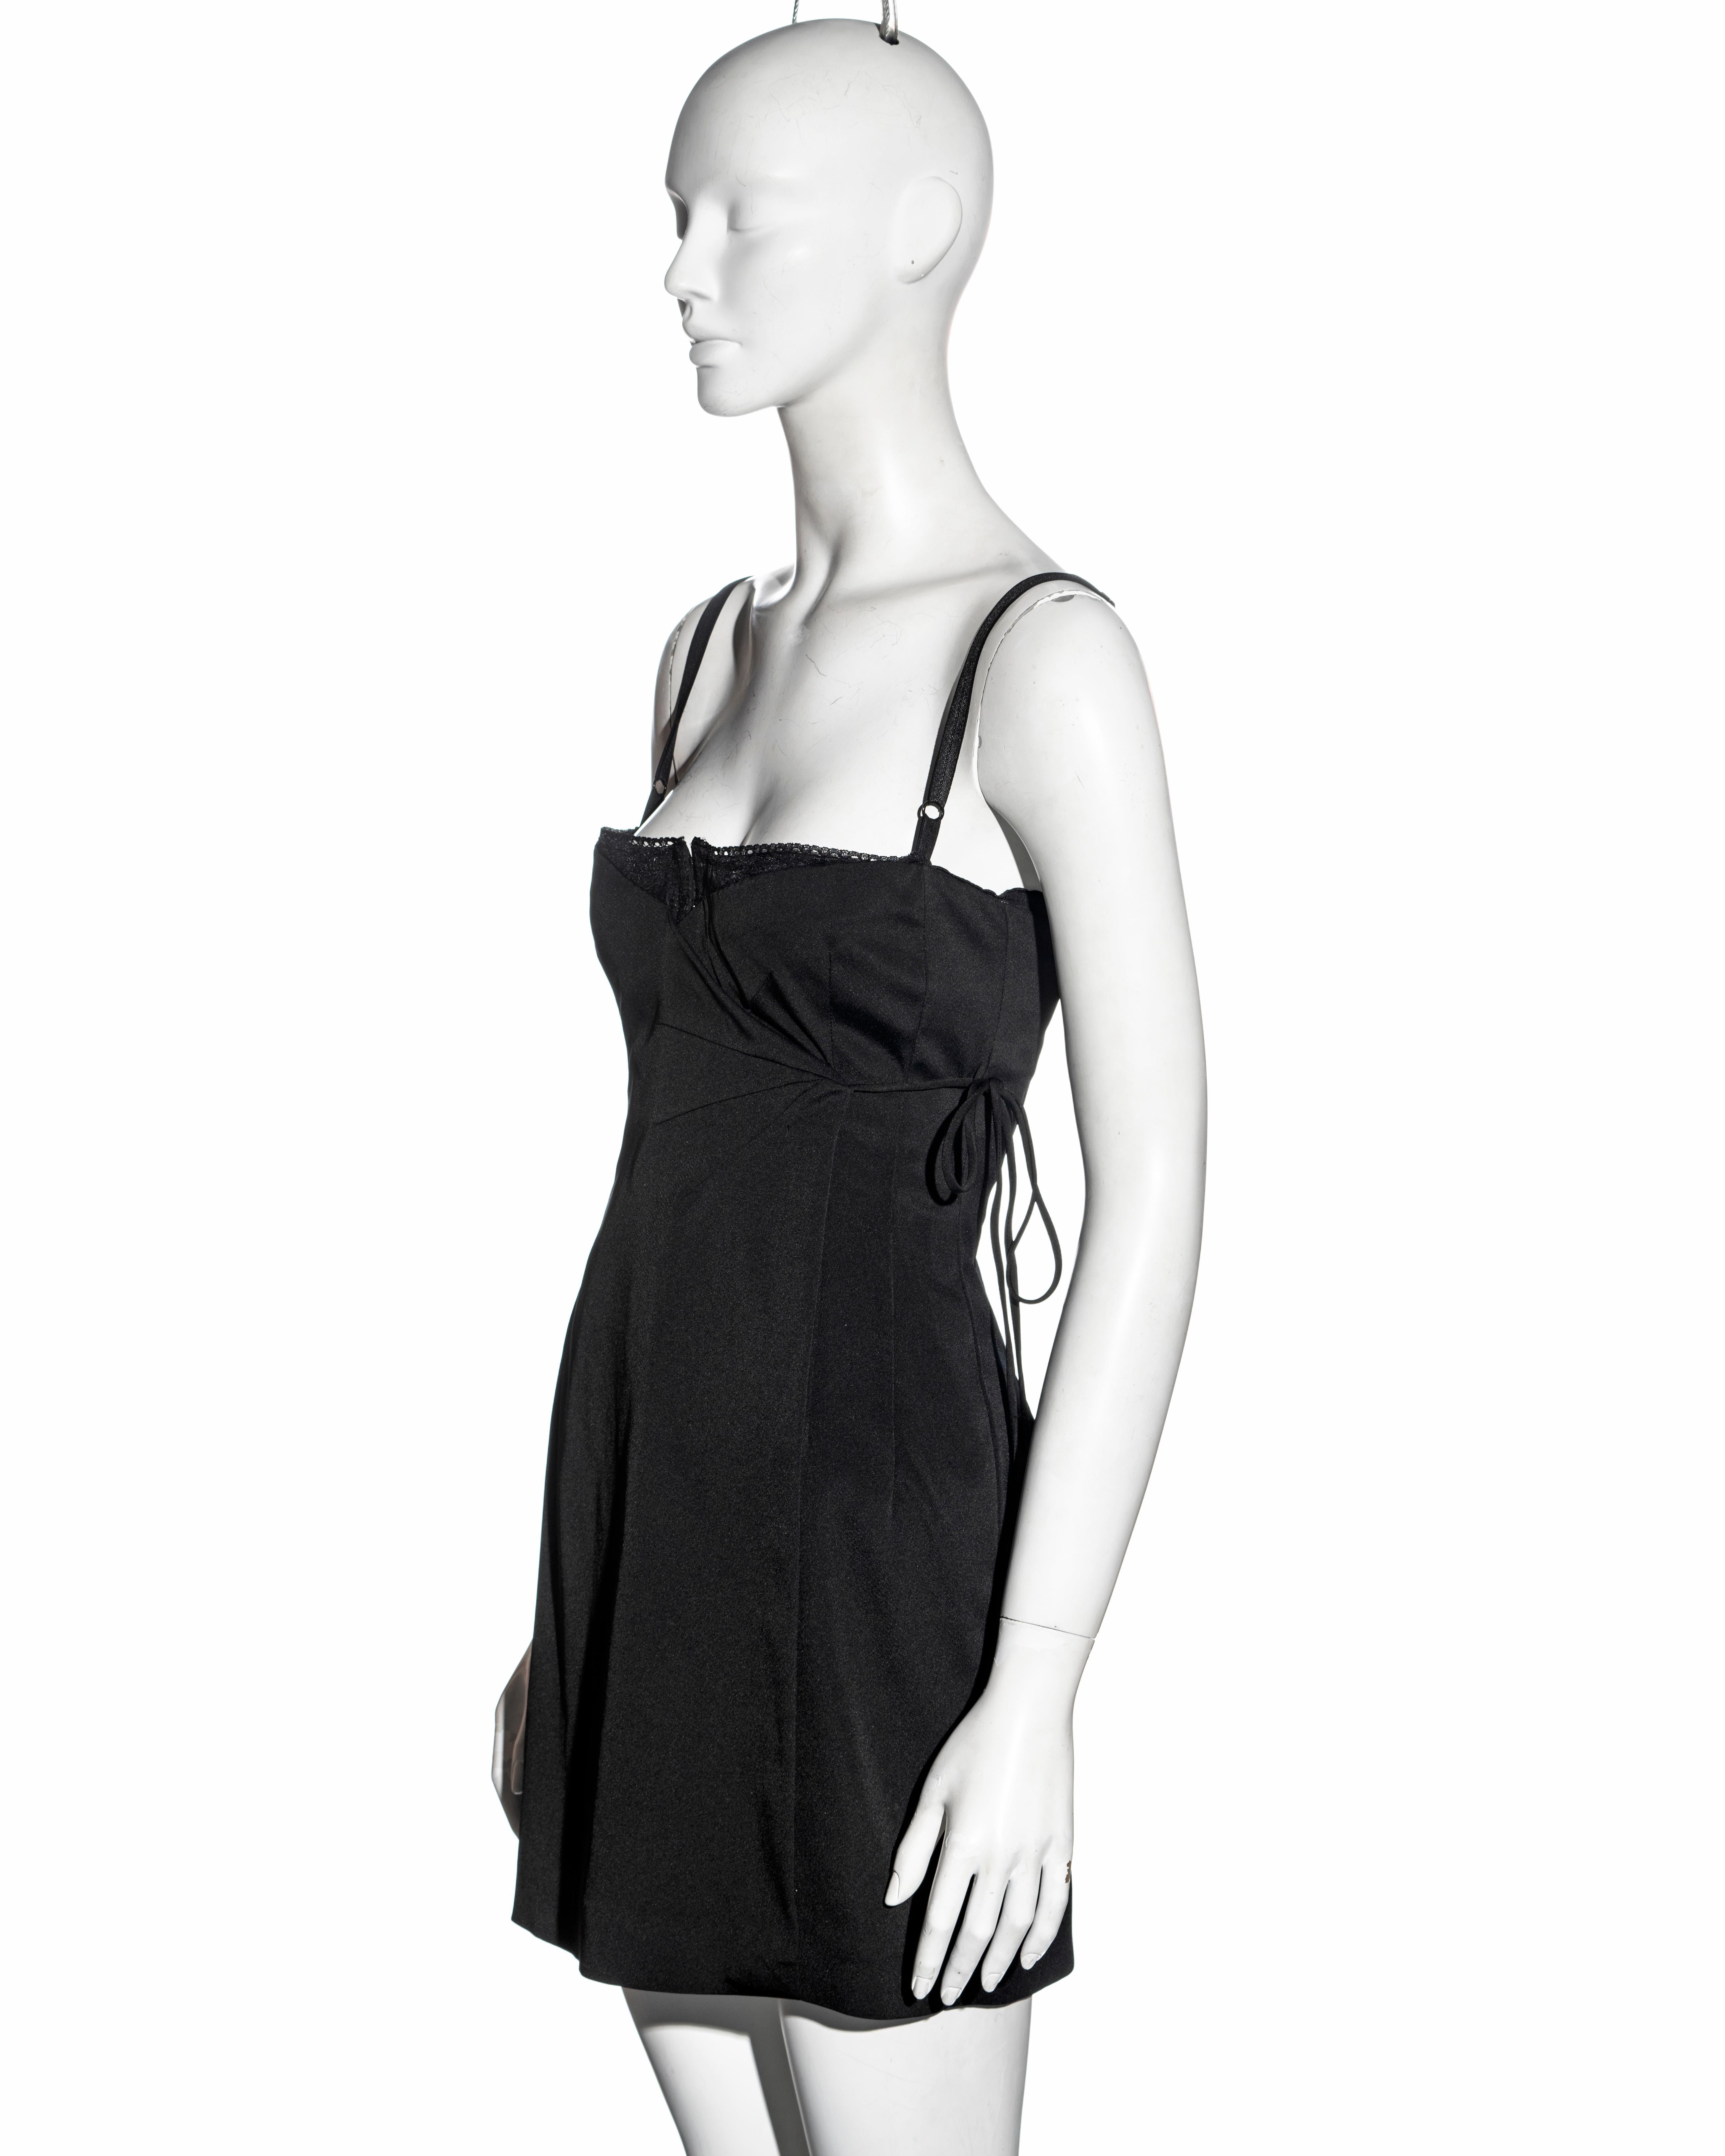 Dolce & Gabbana black mini wrap dress with built in corset bodysuit, fw 1997 2